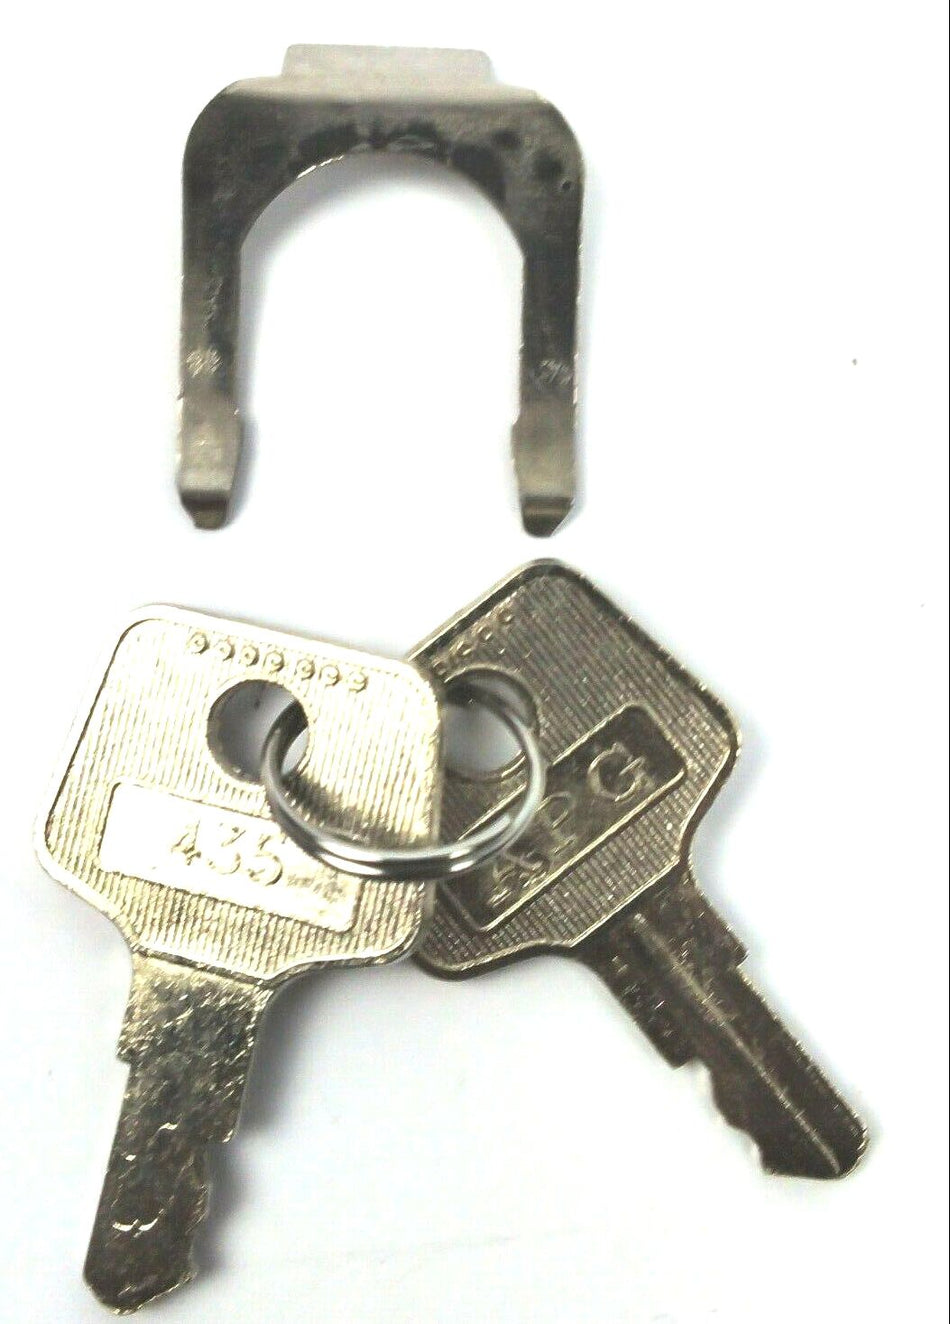 APG VPK-8LS-435 Vasario Lock  Keys - Fits Square Revel HP NCR Cash Drawers